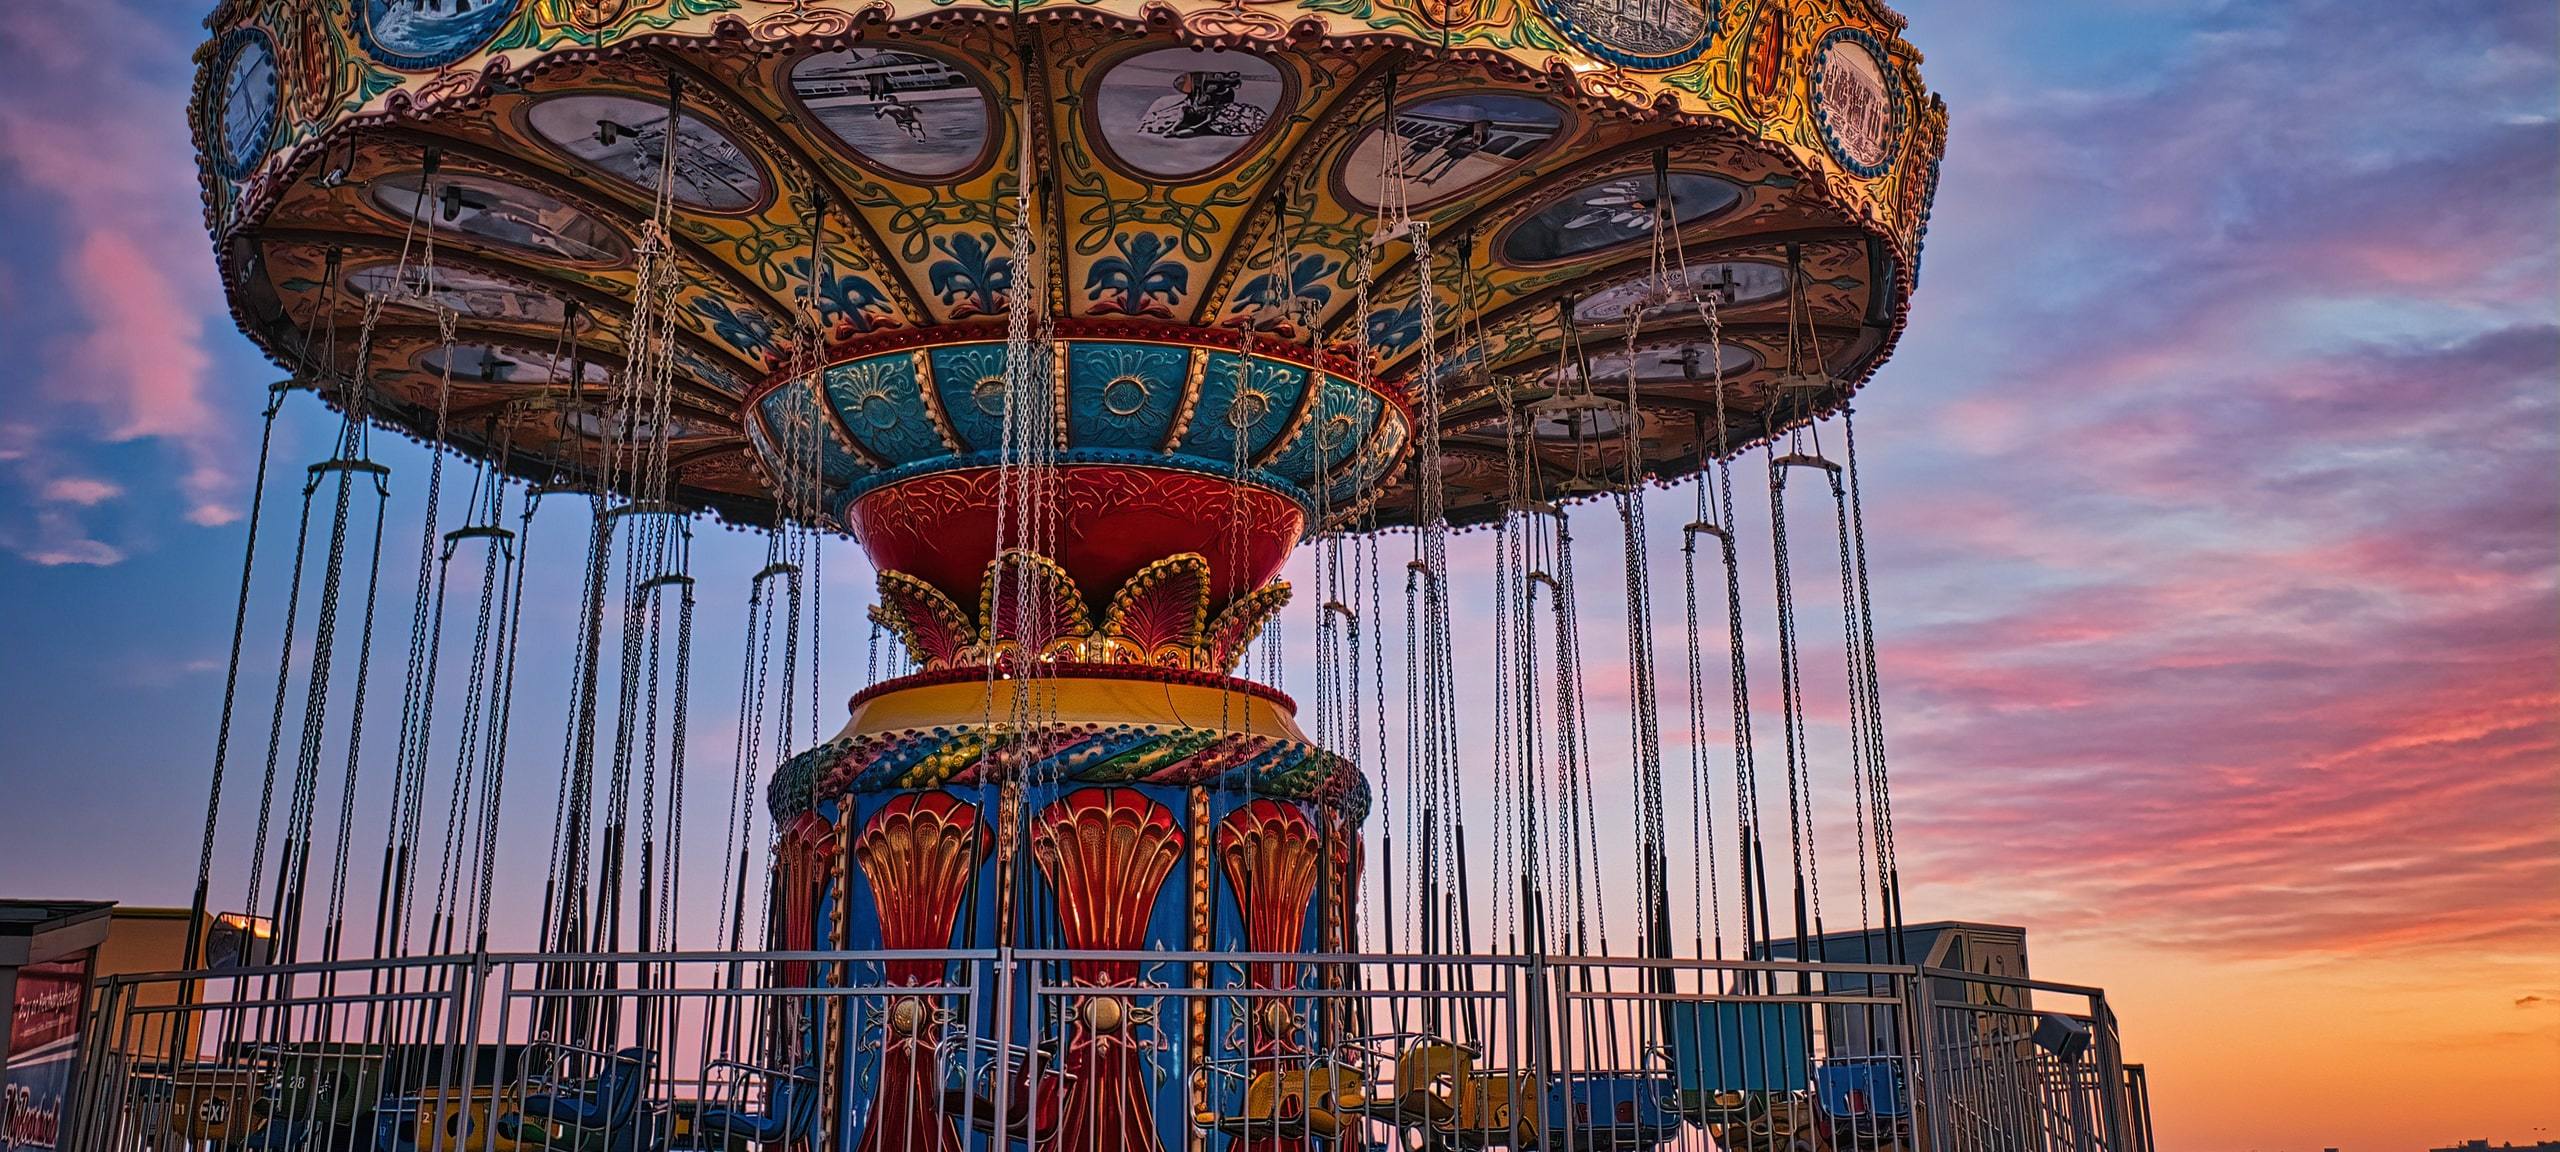 Carousel at historic Santa Cruz Boardwalk during sunset